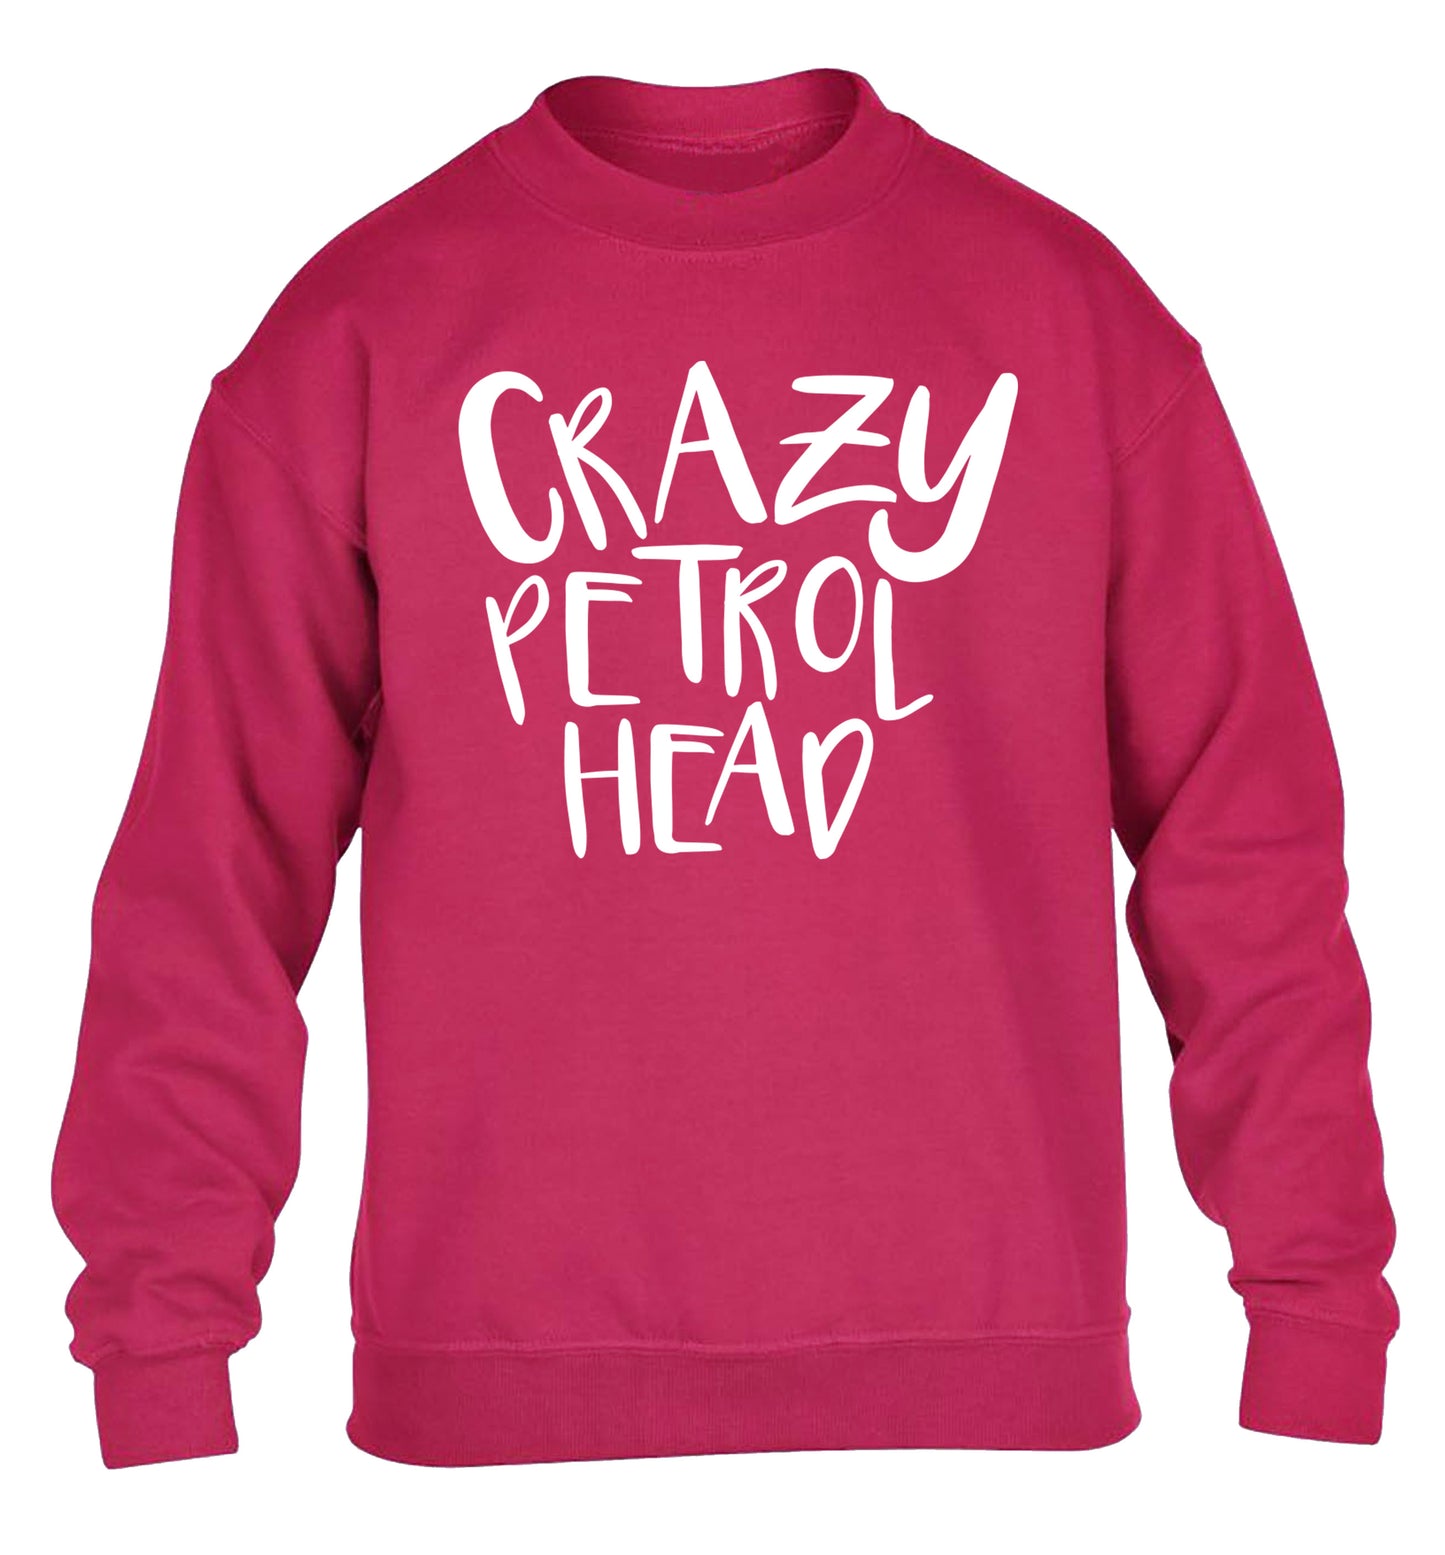 Crazy petrol head children's pink sweater 12-13 Years